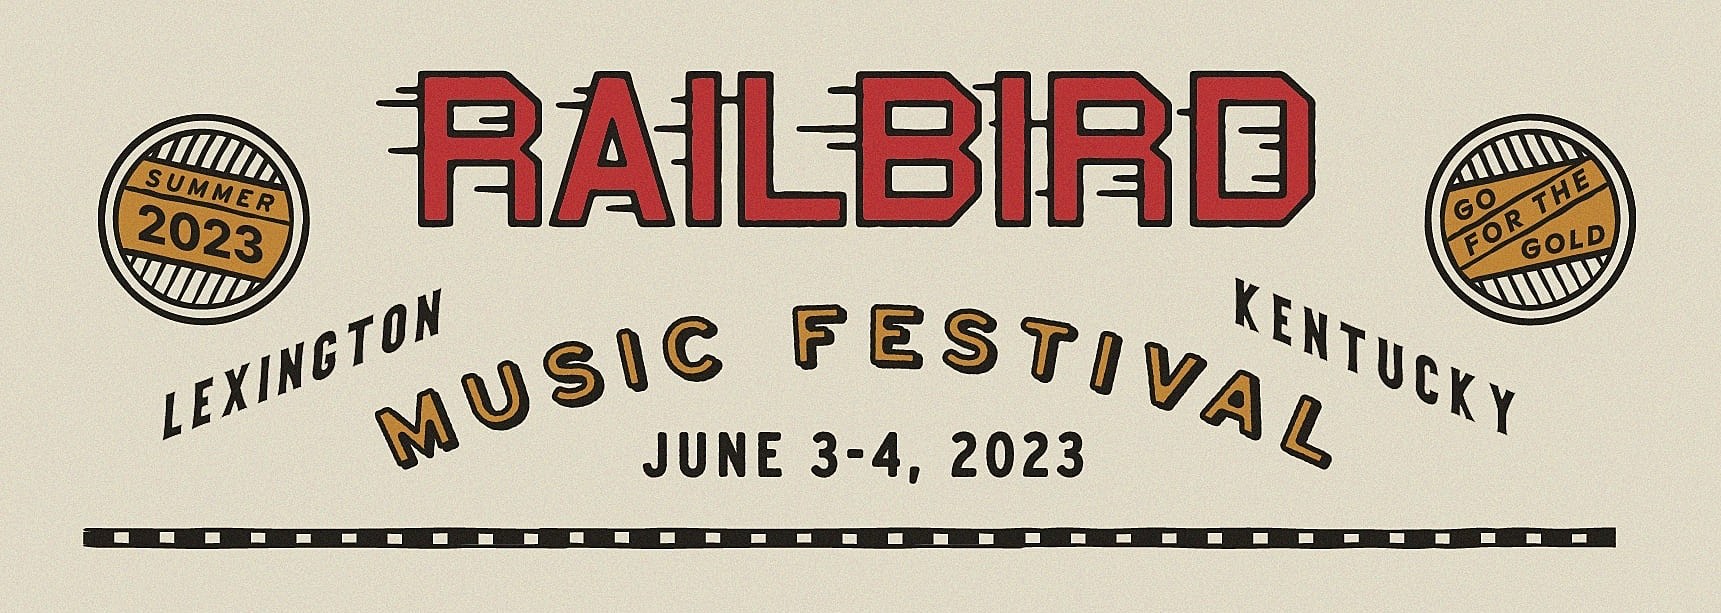 Railbird Music Festival 2023 Lineup Announced, See the Full List Here